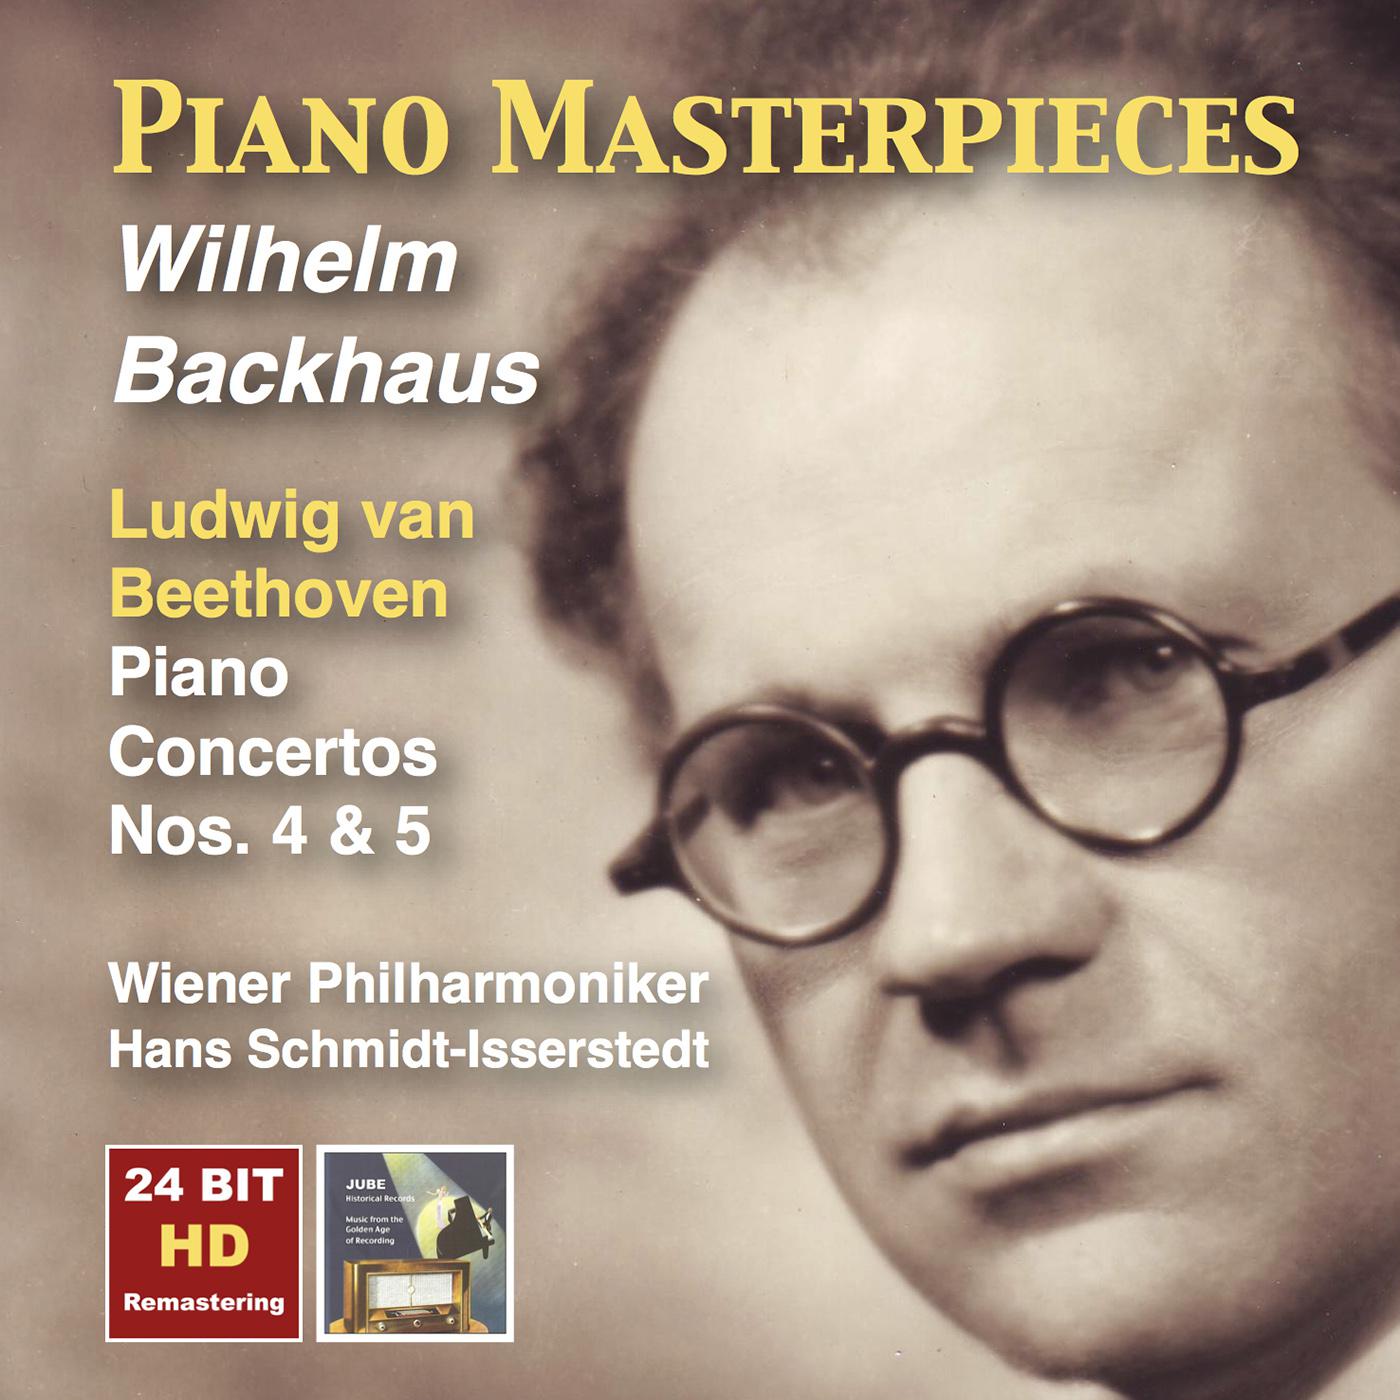 PIANO MASTERPIECES - Wilhelm Backhaus (1958)